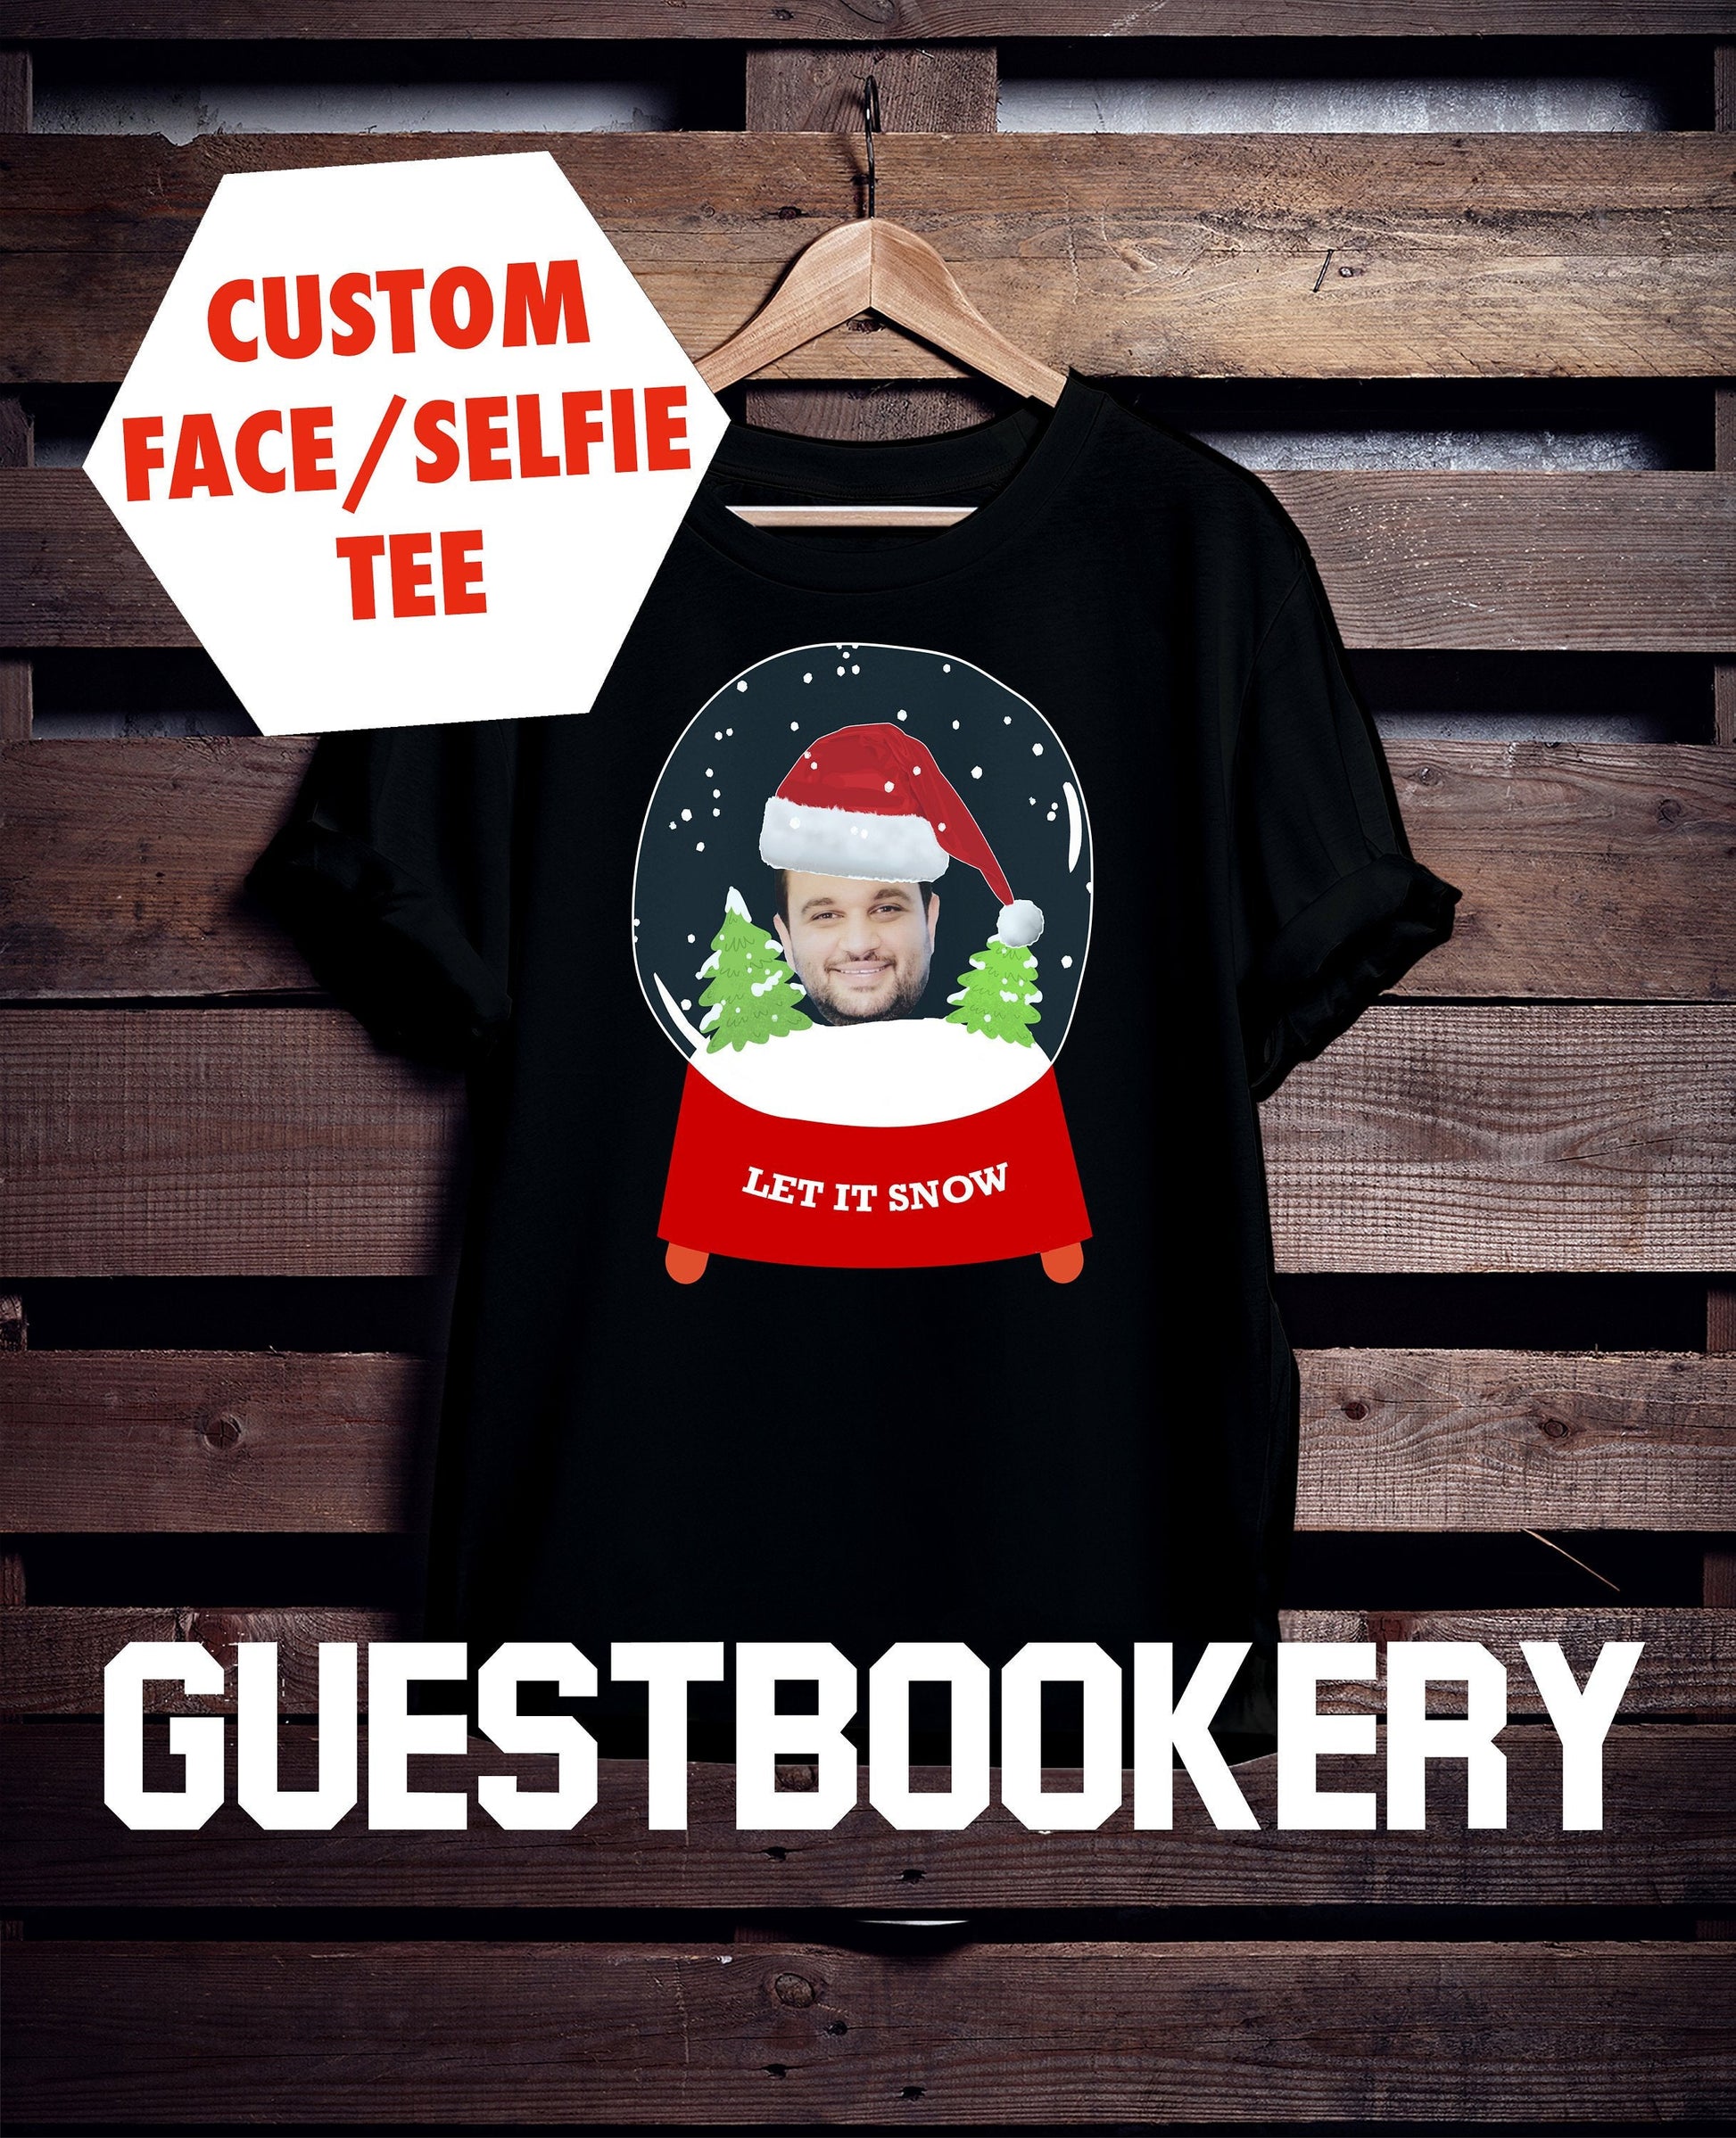 Custom Face Ugly Christmas Globe T-shirt